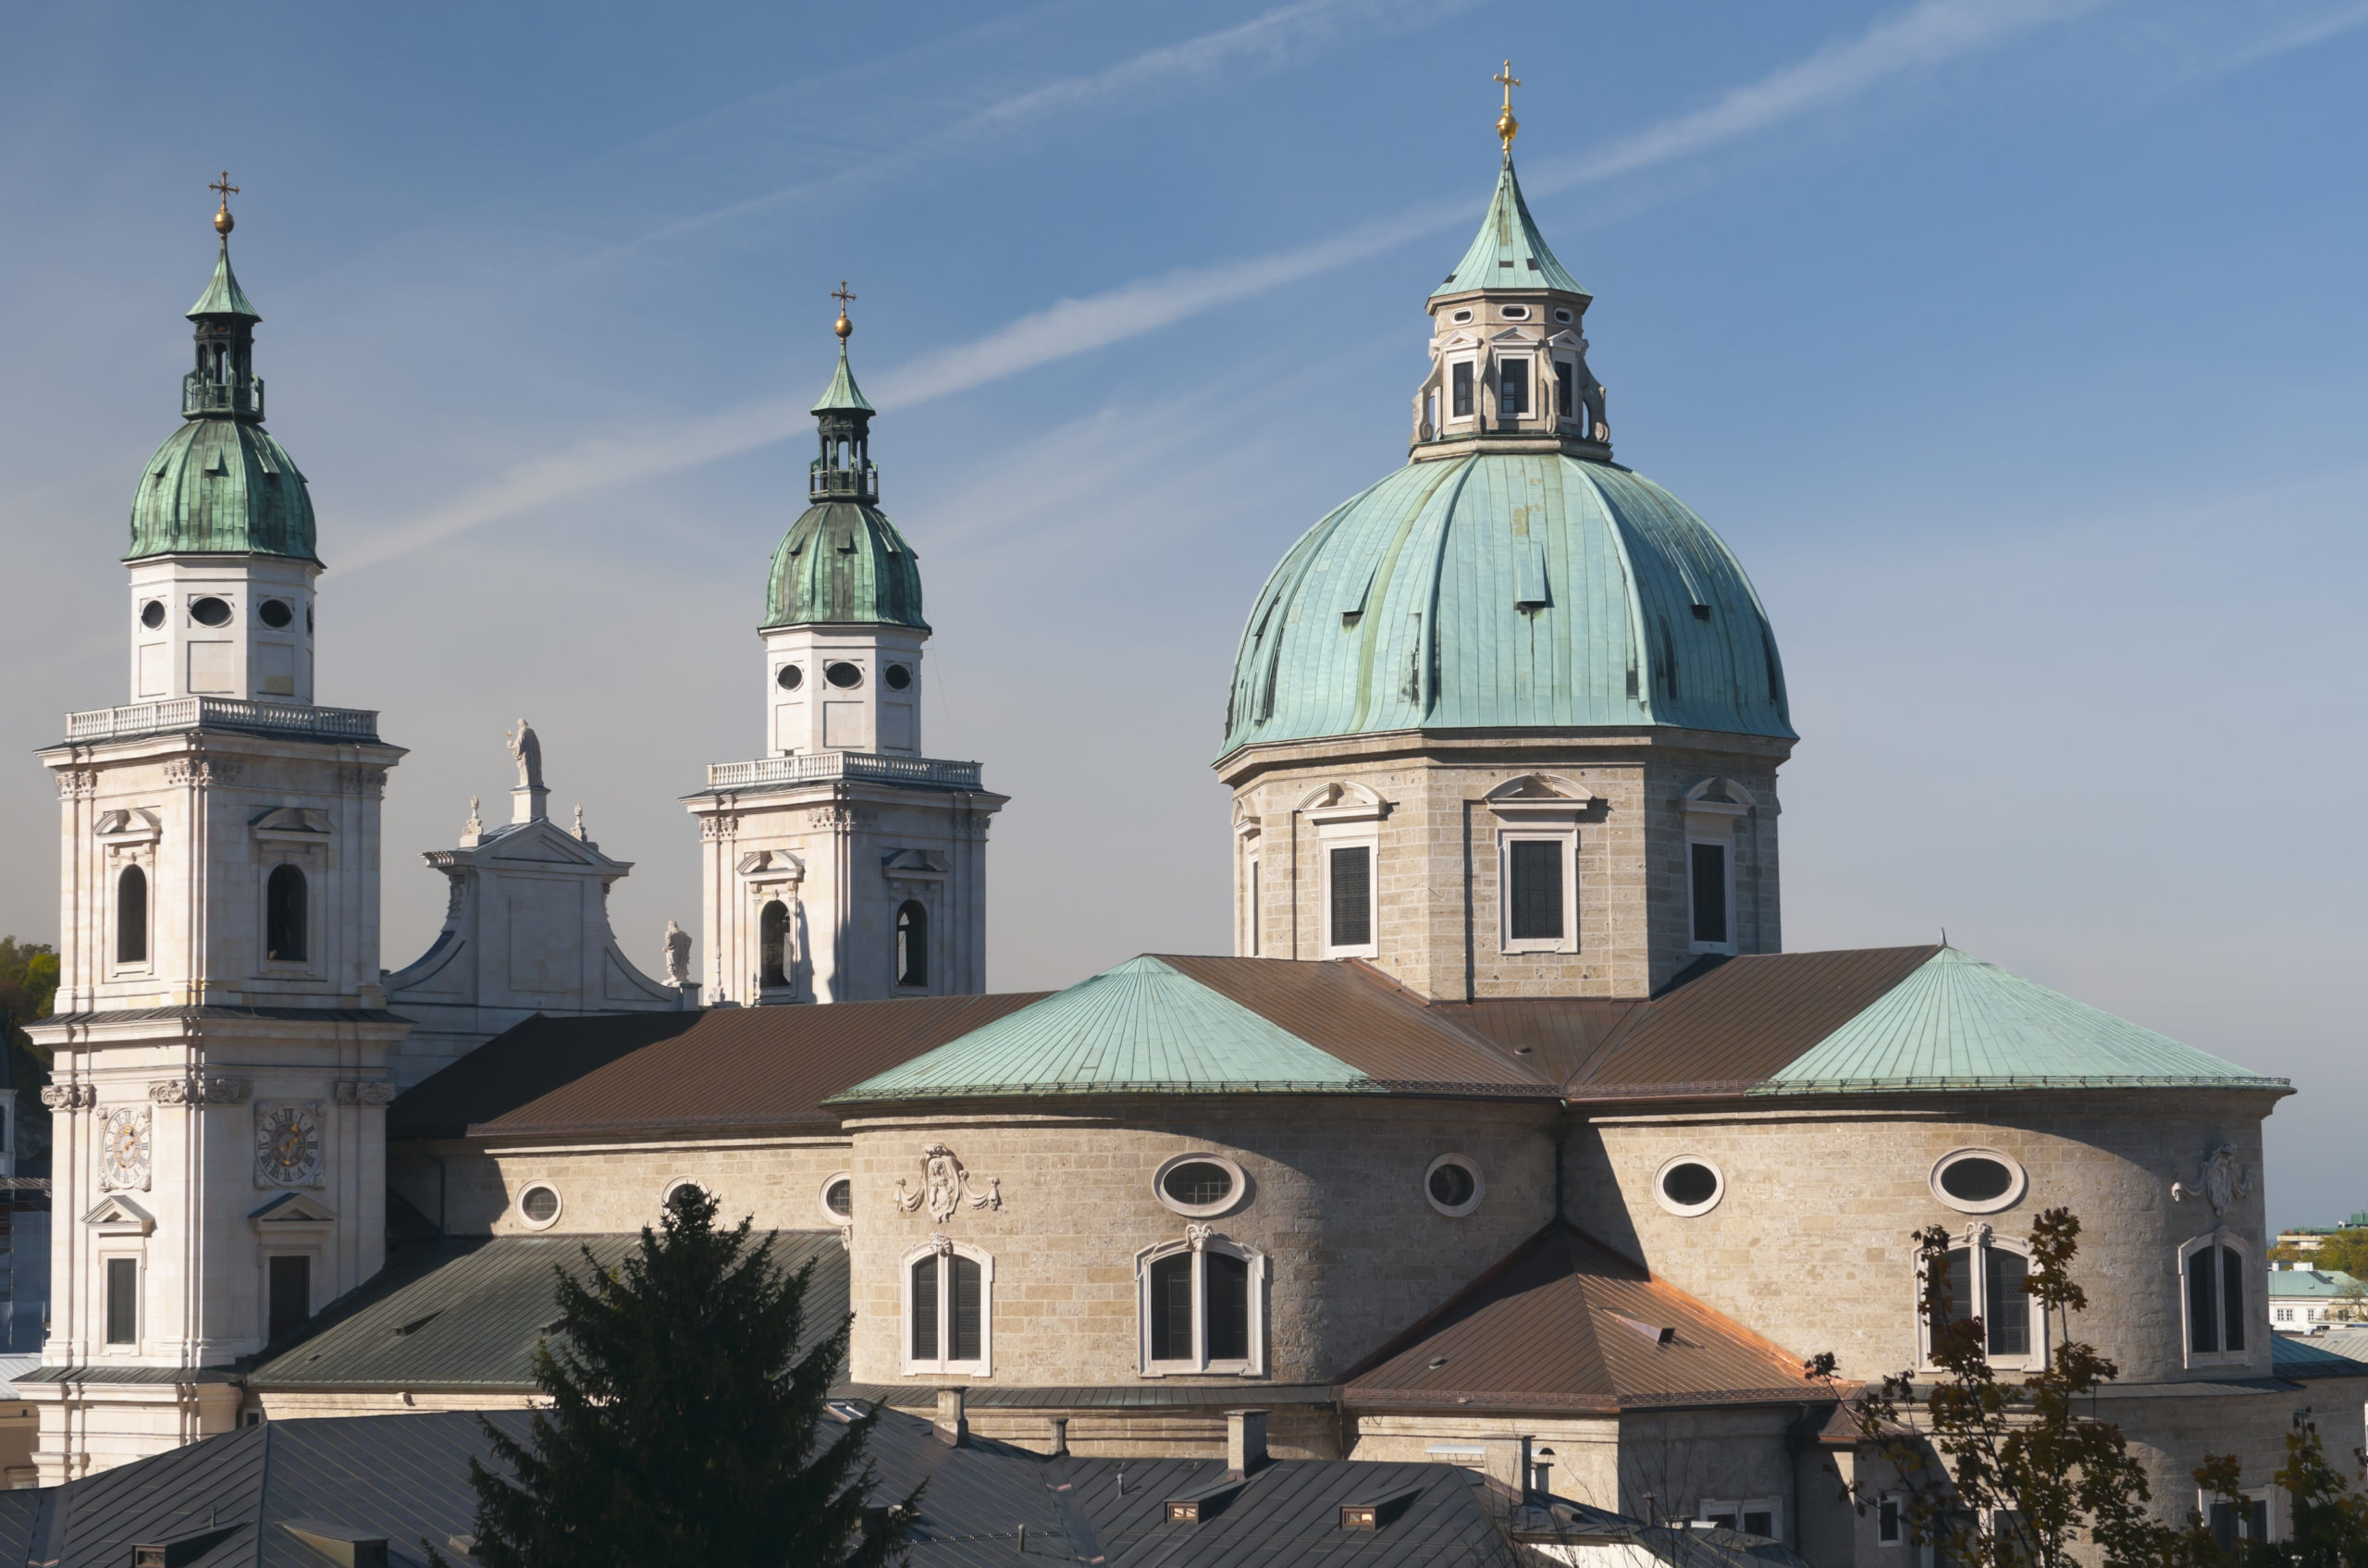 Salzburg chronicle